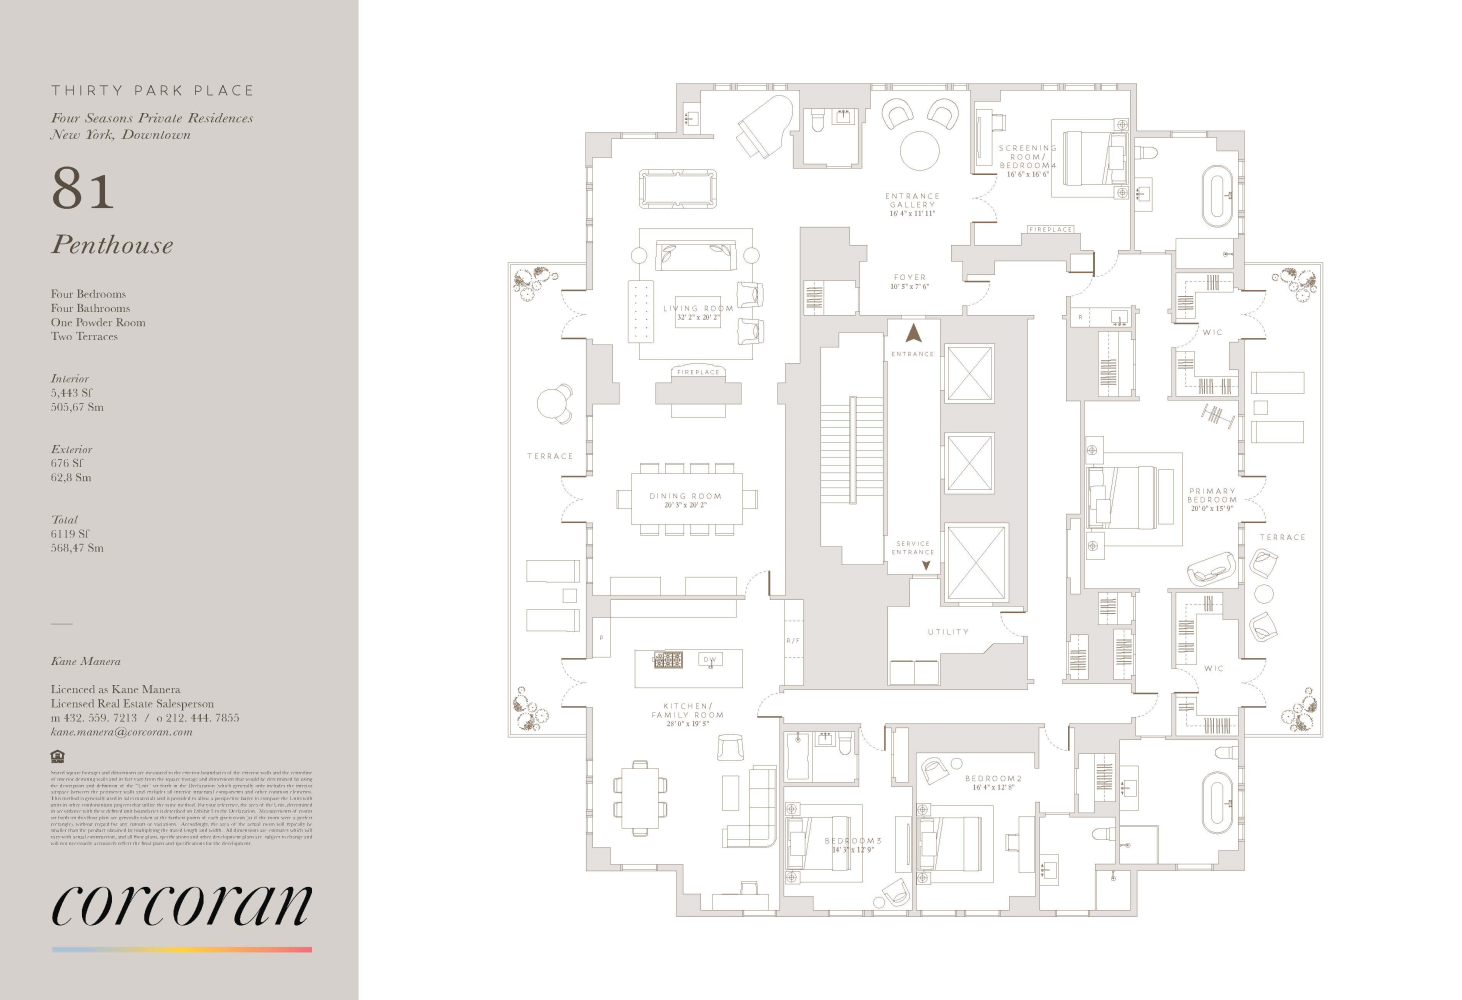 Floorplan for 30 Park Place, PH81